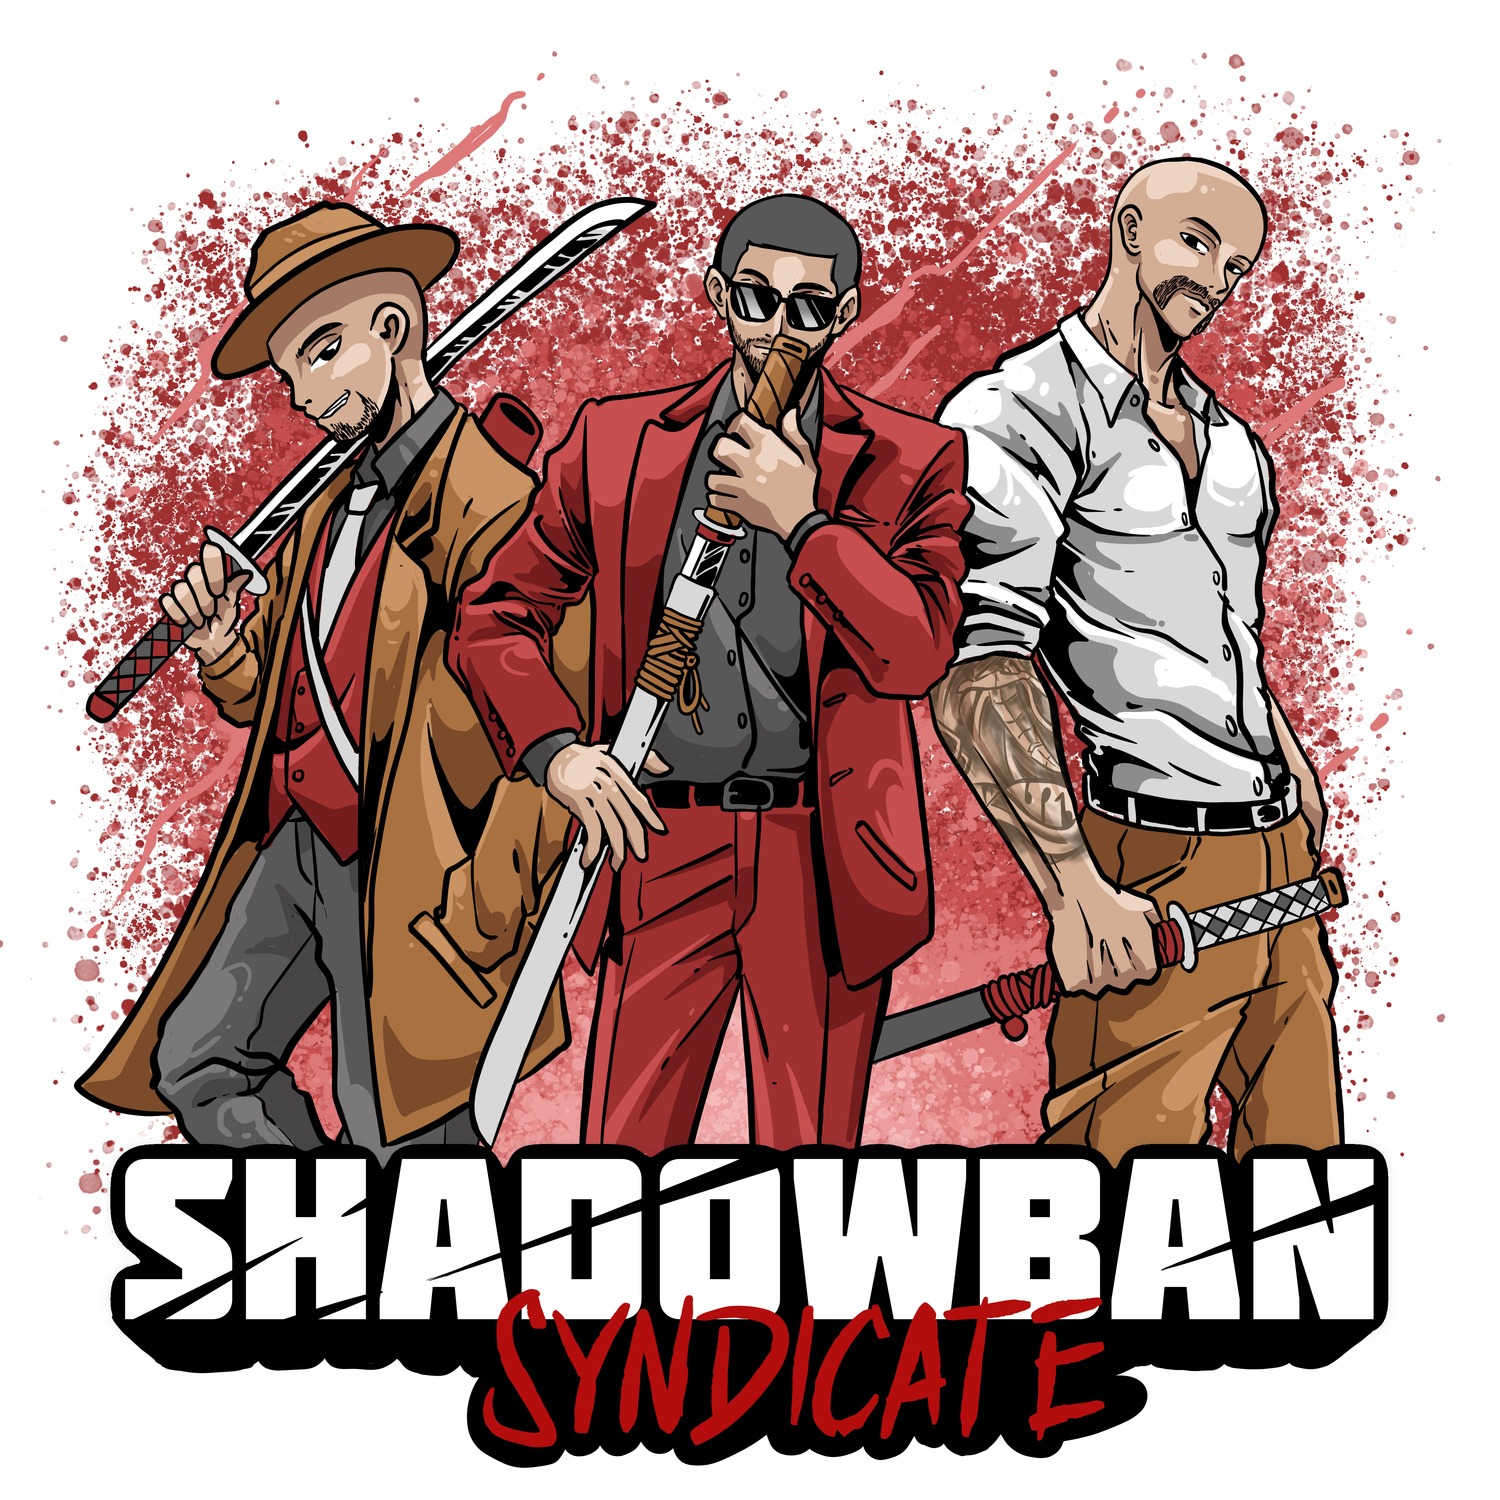 Shadowban Syndicate #8: ”Stargates”